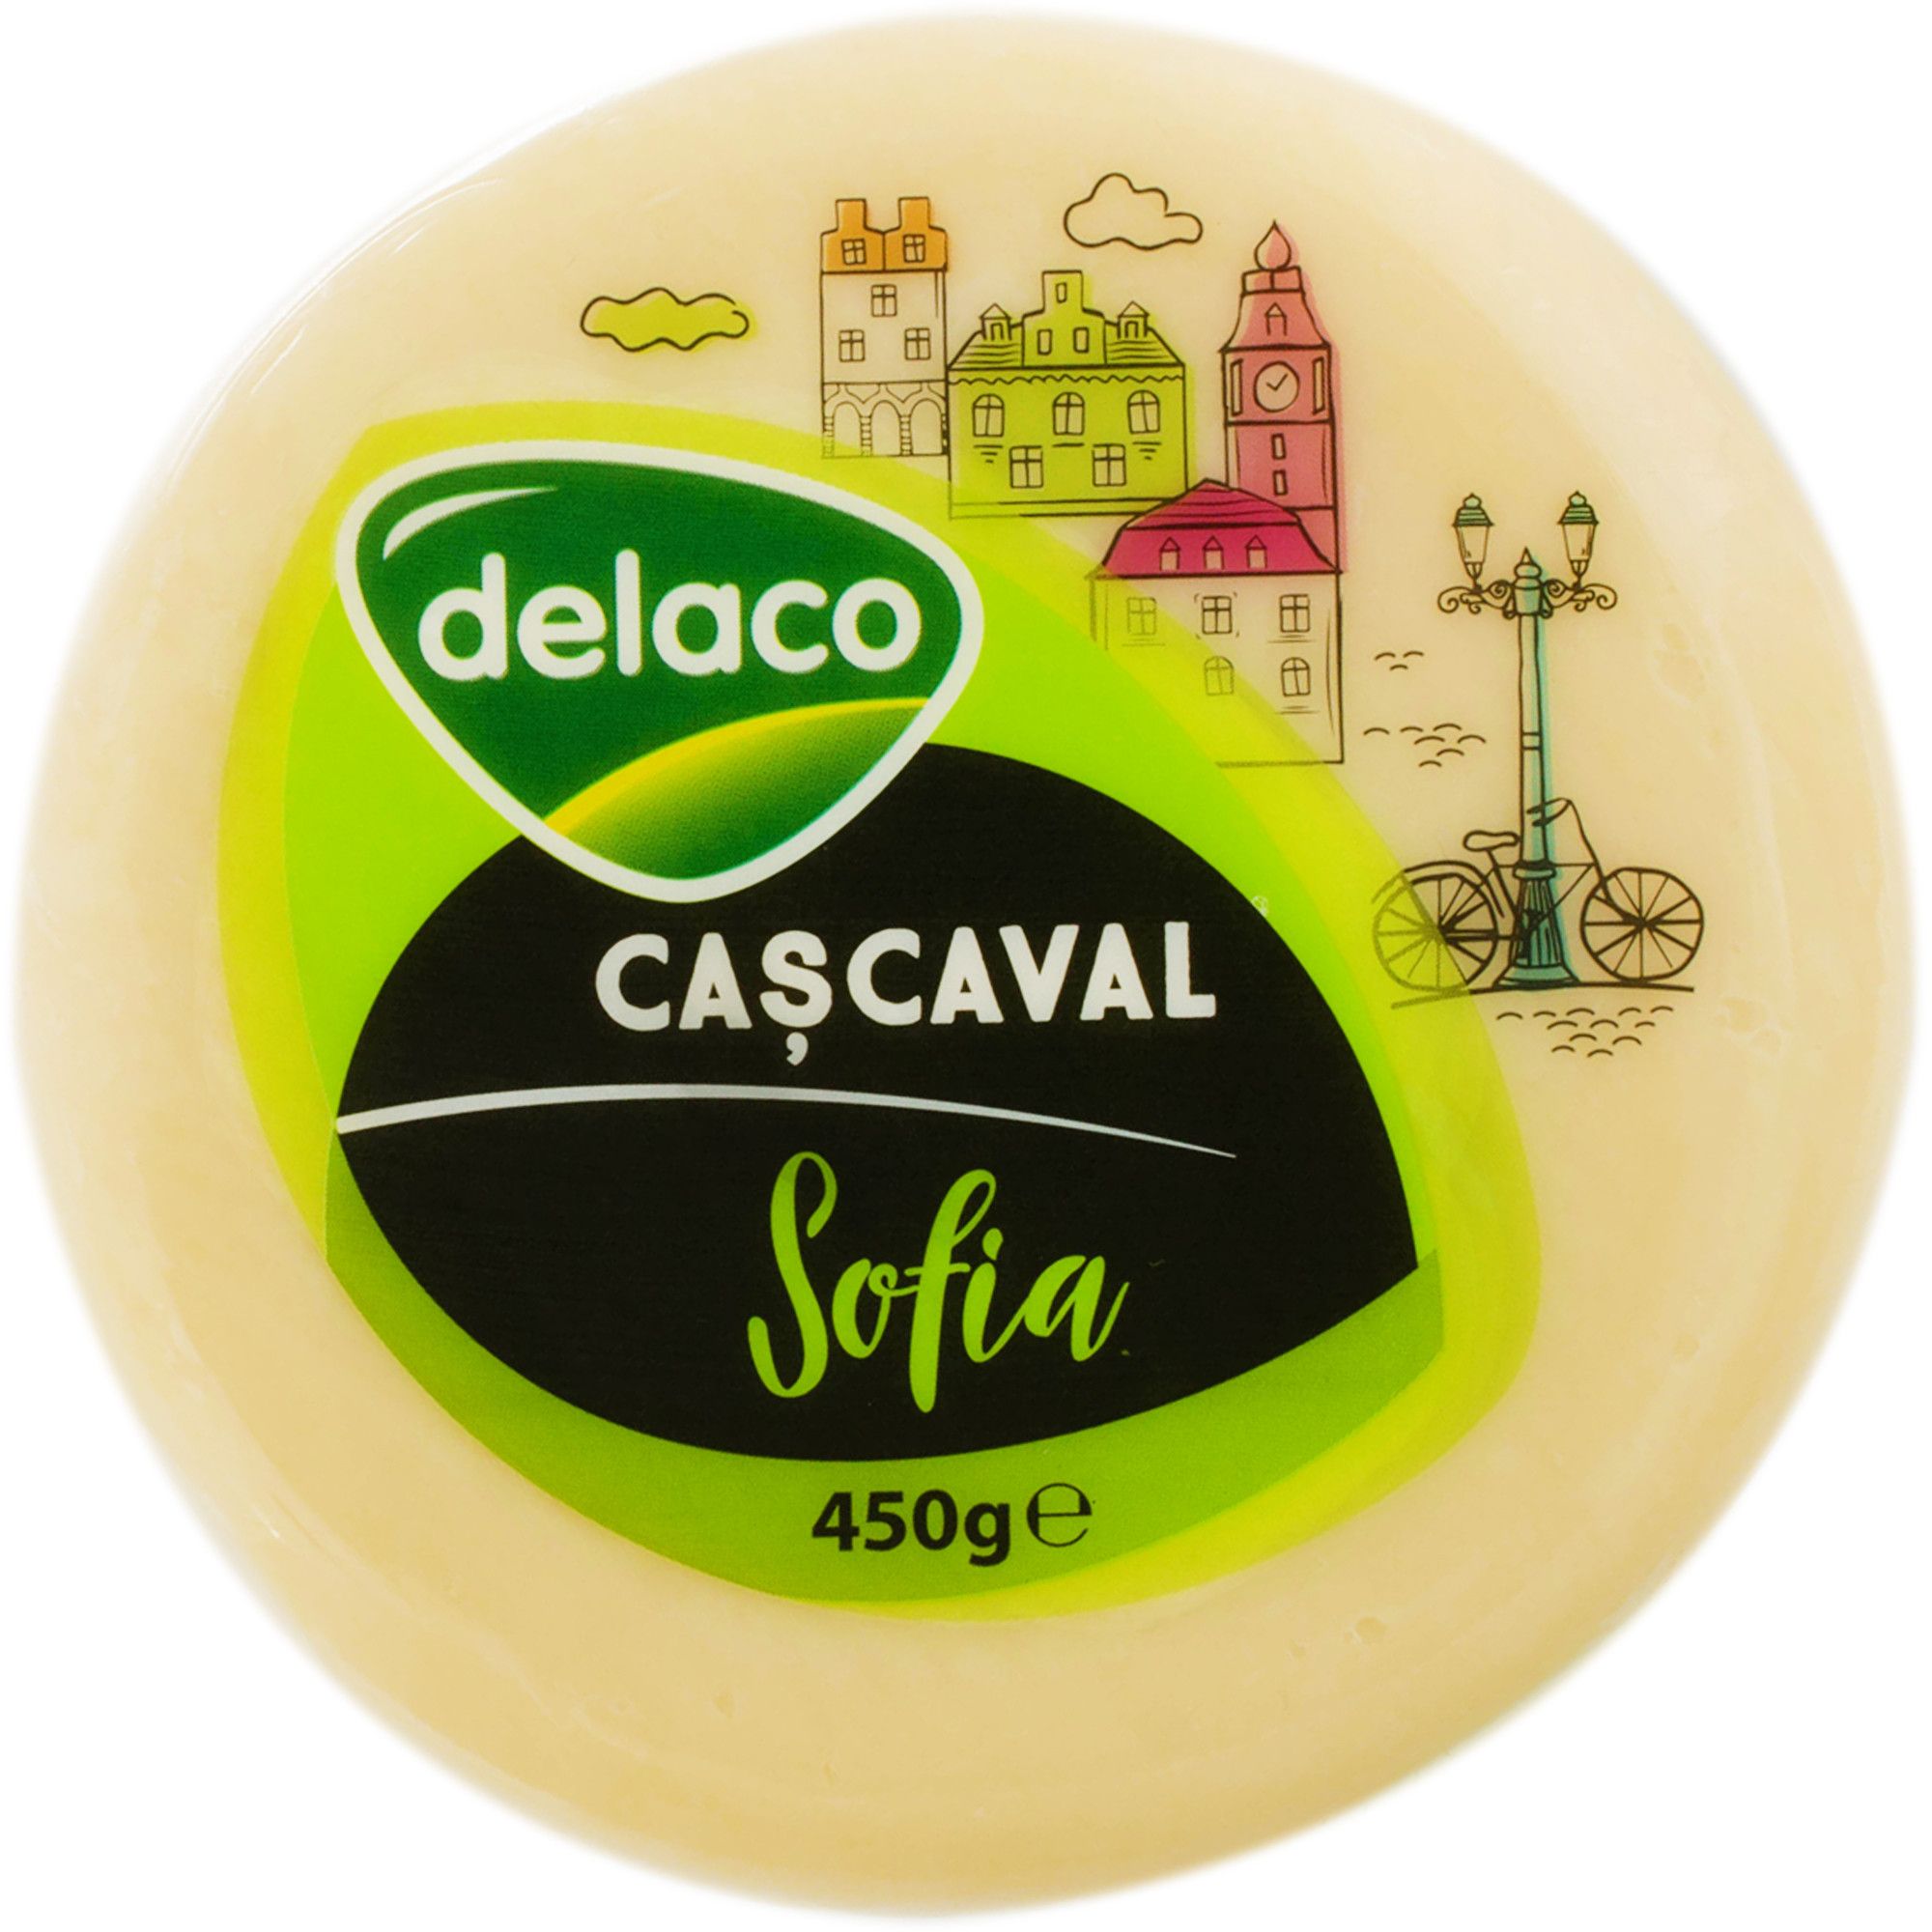 Cascaval Sofia 450g Delaco